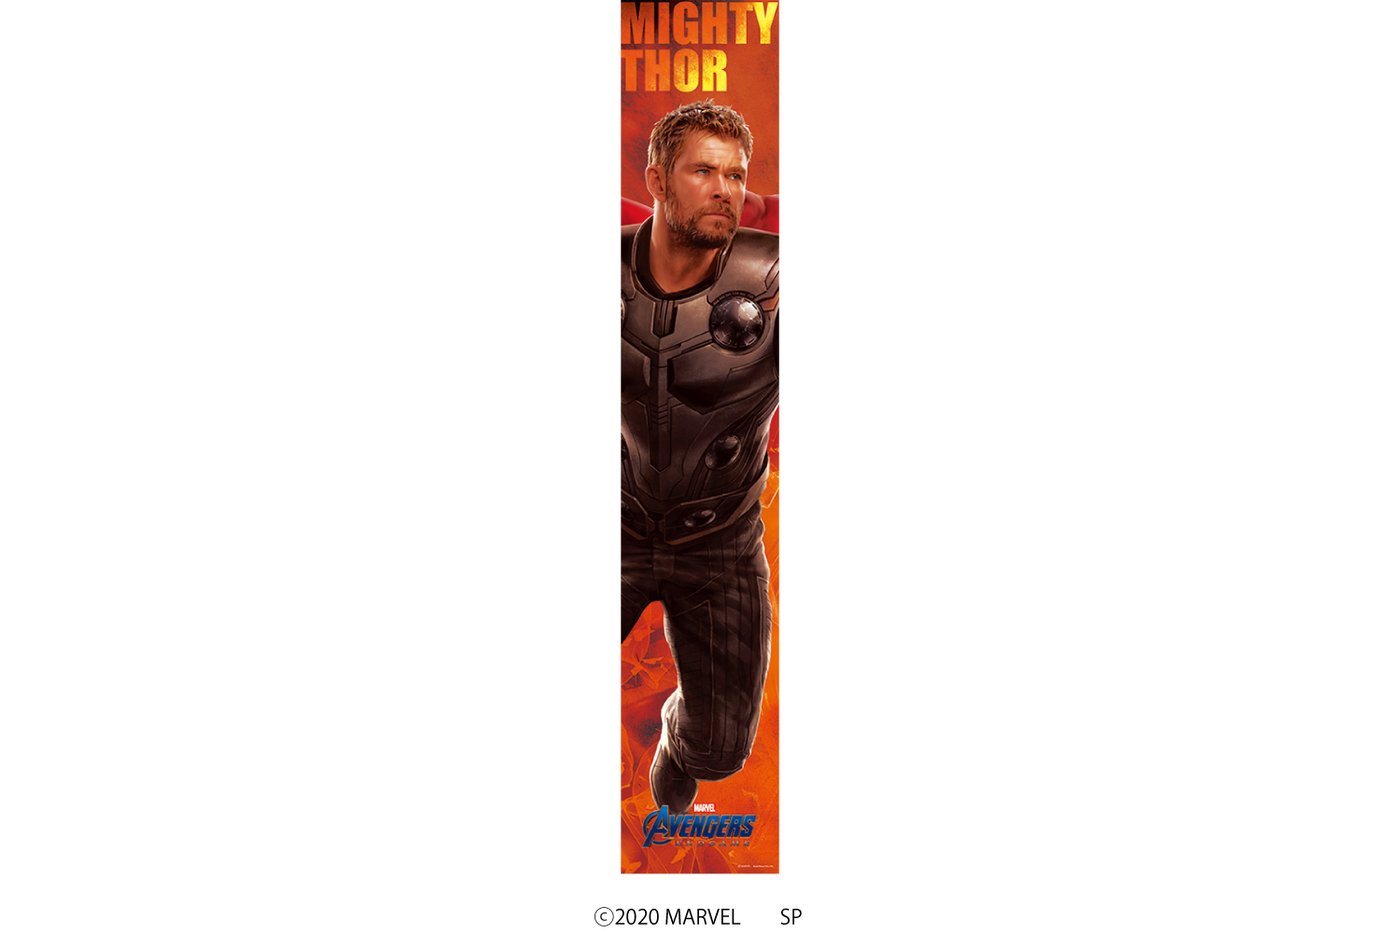 Marvel マーベル Avengers Endgame 壁紙素材ウォールステッカー マイティ ソー 1シートタイプ Wall Paper M012 1 プリテック 税込